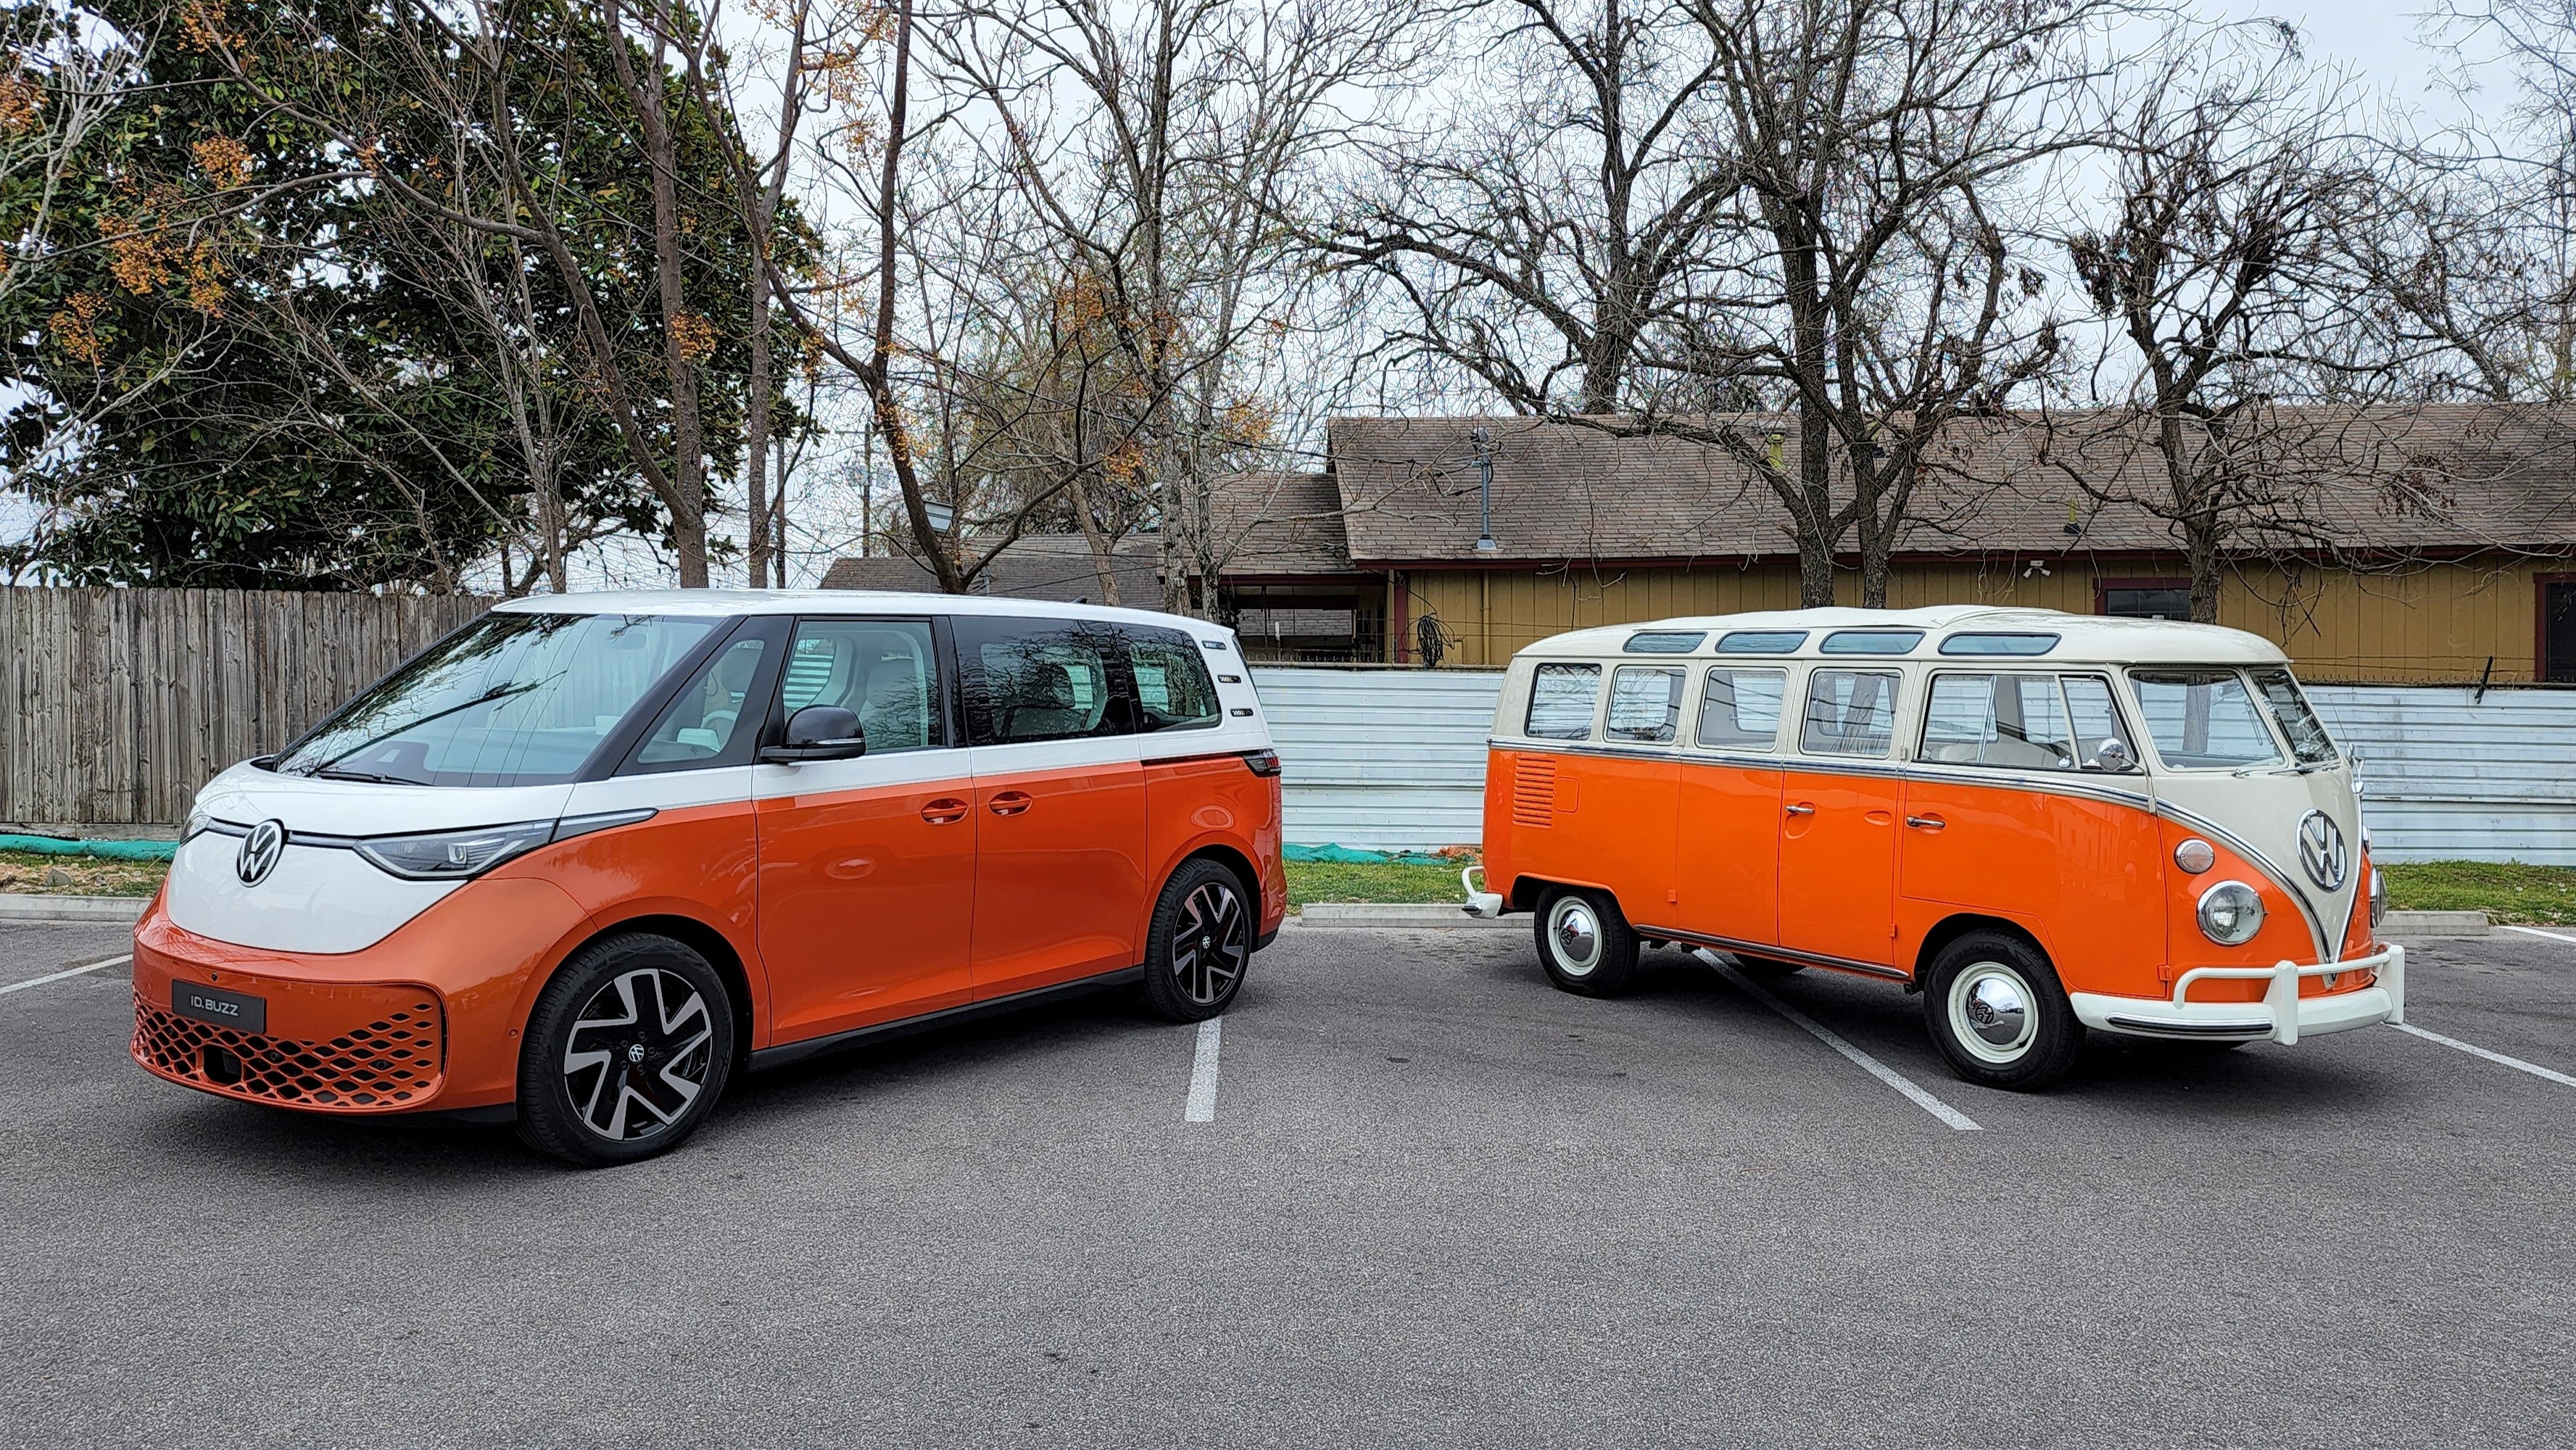 The new ID Buzz alongside the original VW Camper van